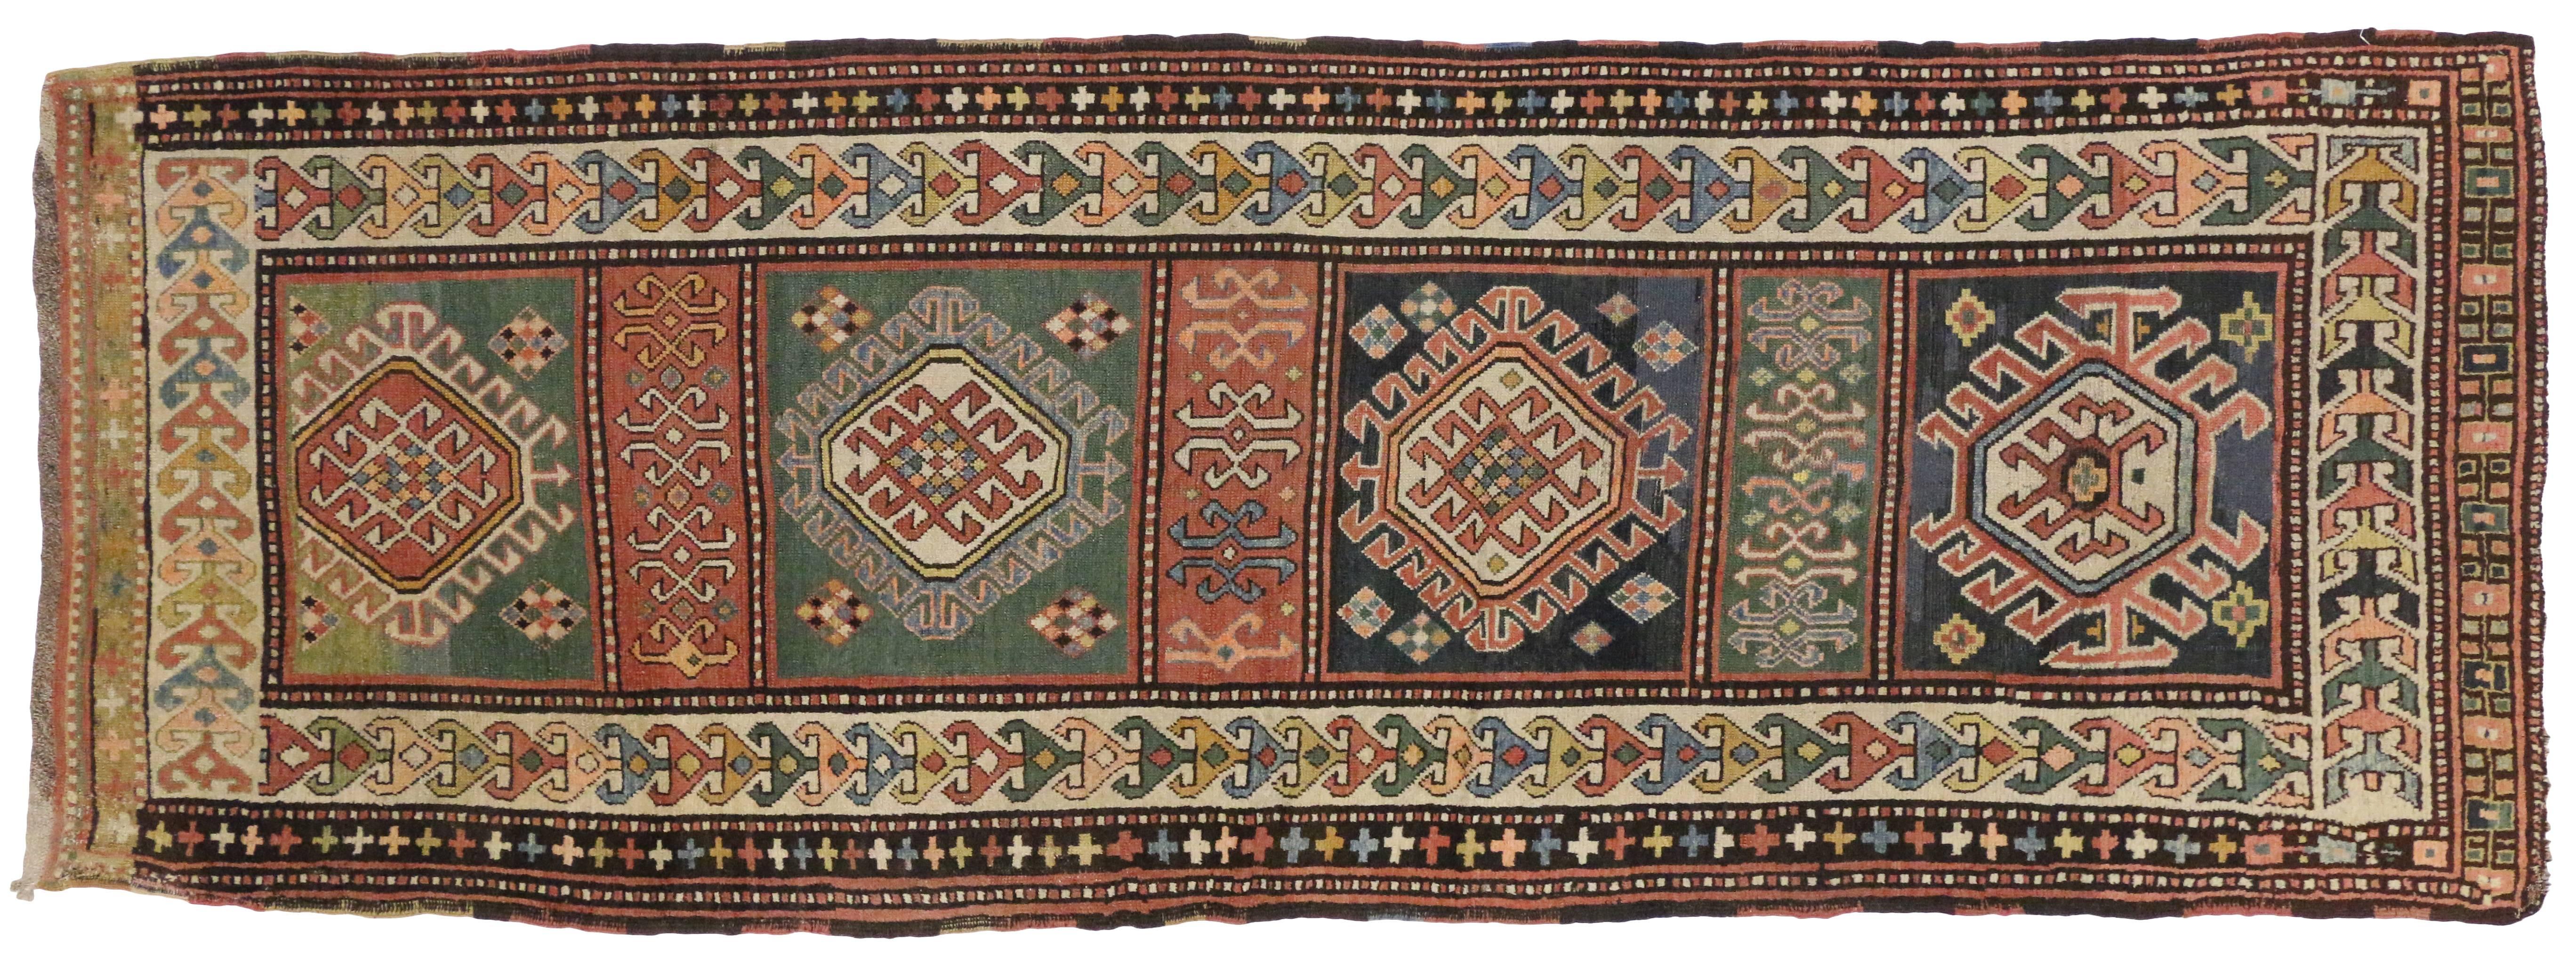 Rustic Tribal Style Antique Caucasian Kazak Rug, Wide Hallway Runner 5